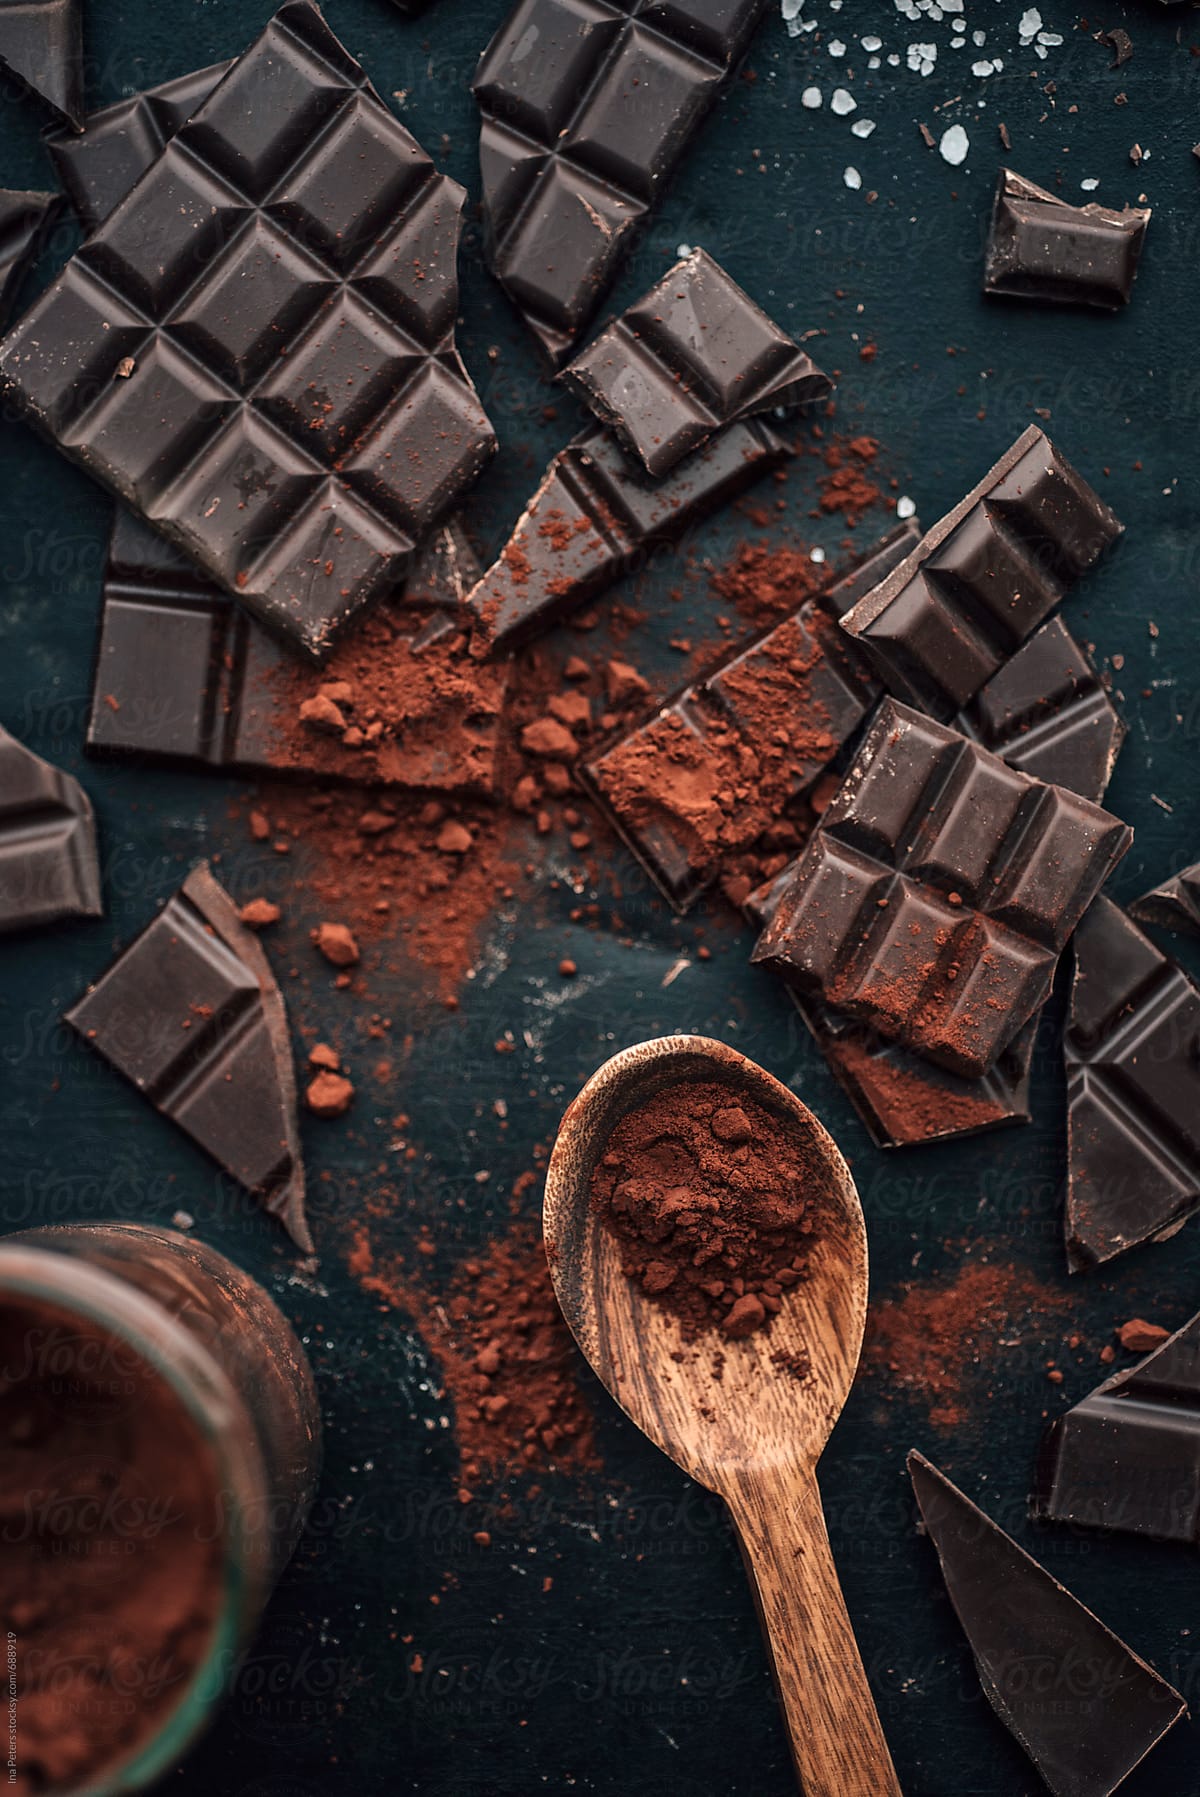 Food: Dark chocolate, cocoa and sea salt